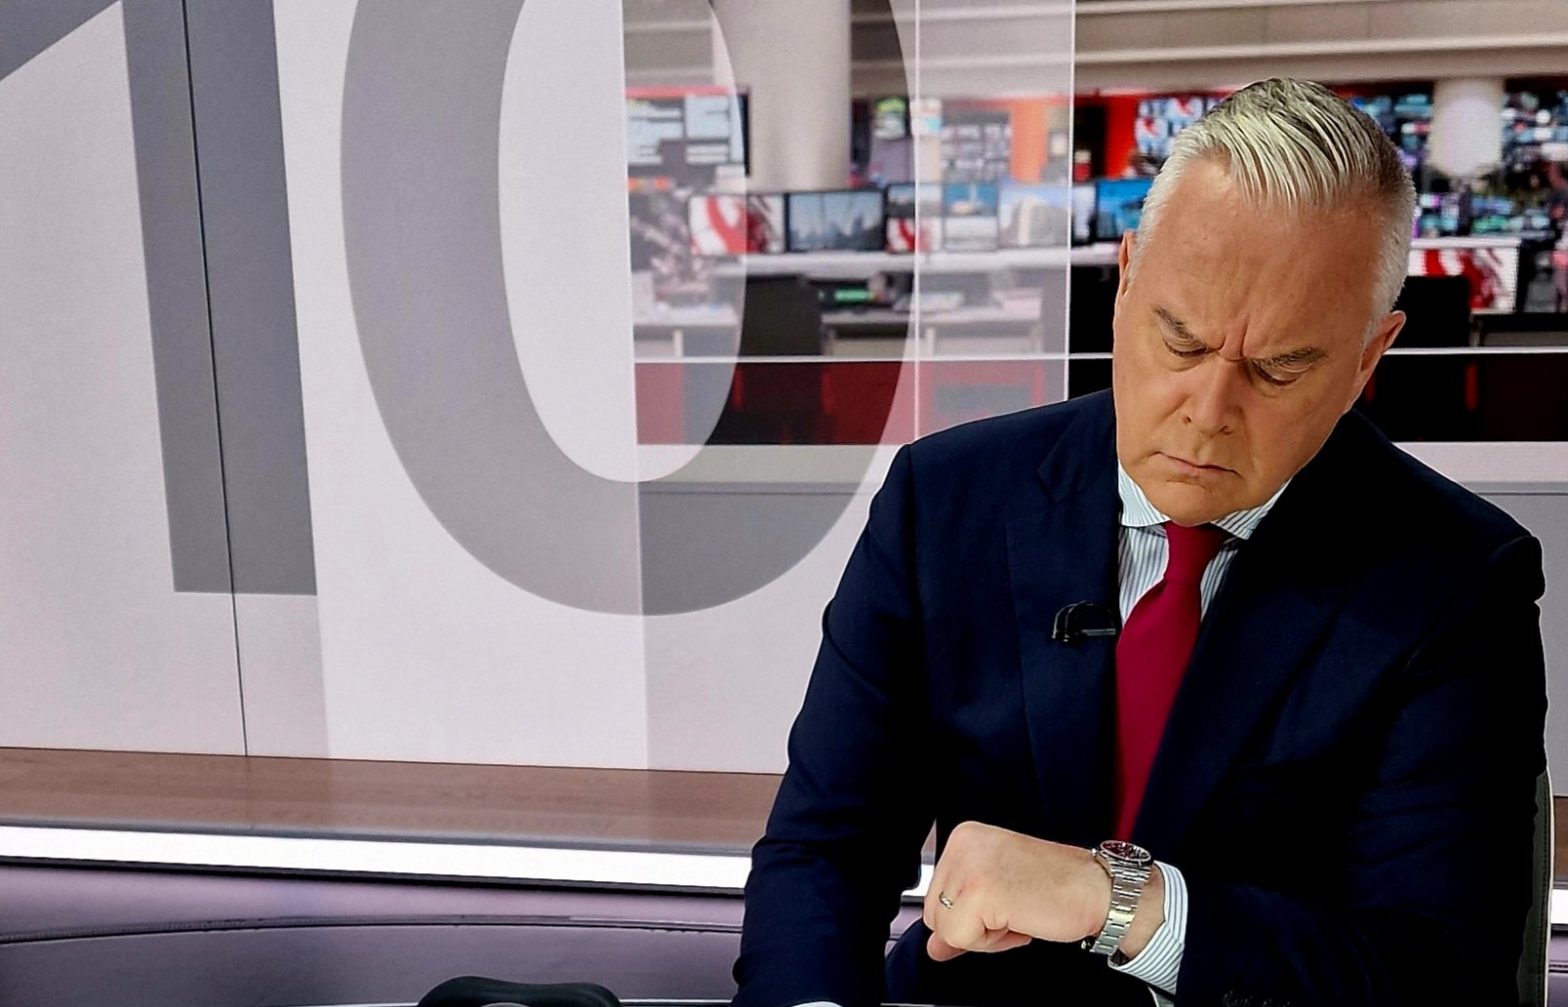 Huw Edwards trends after BBC presenter Victoria Derbyshire’s alleged ‘slip-up’ video goes viral